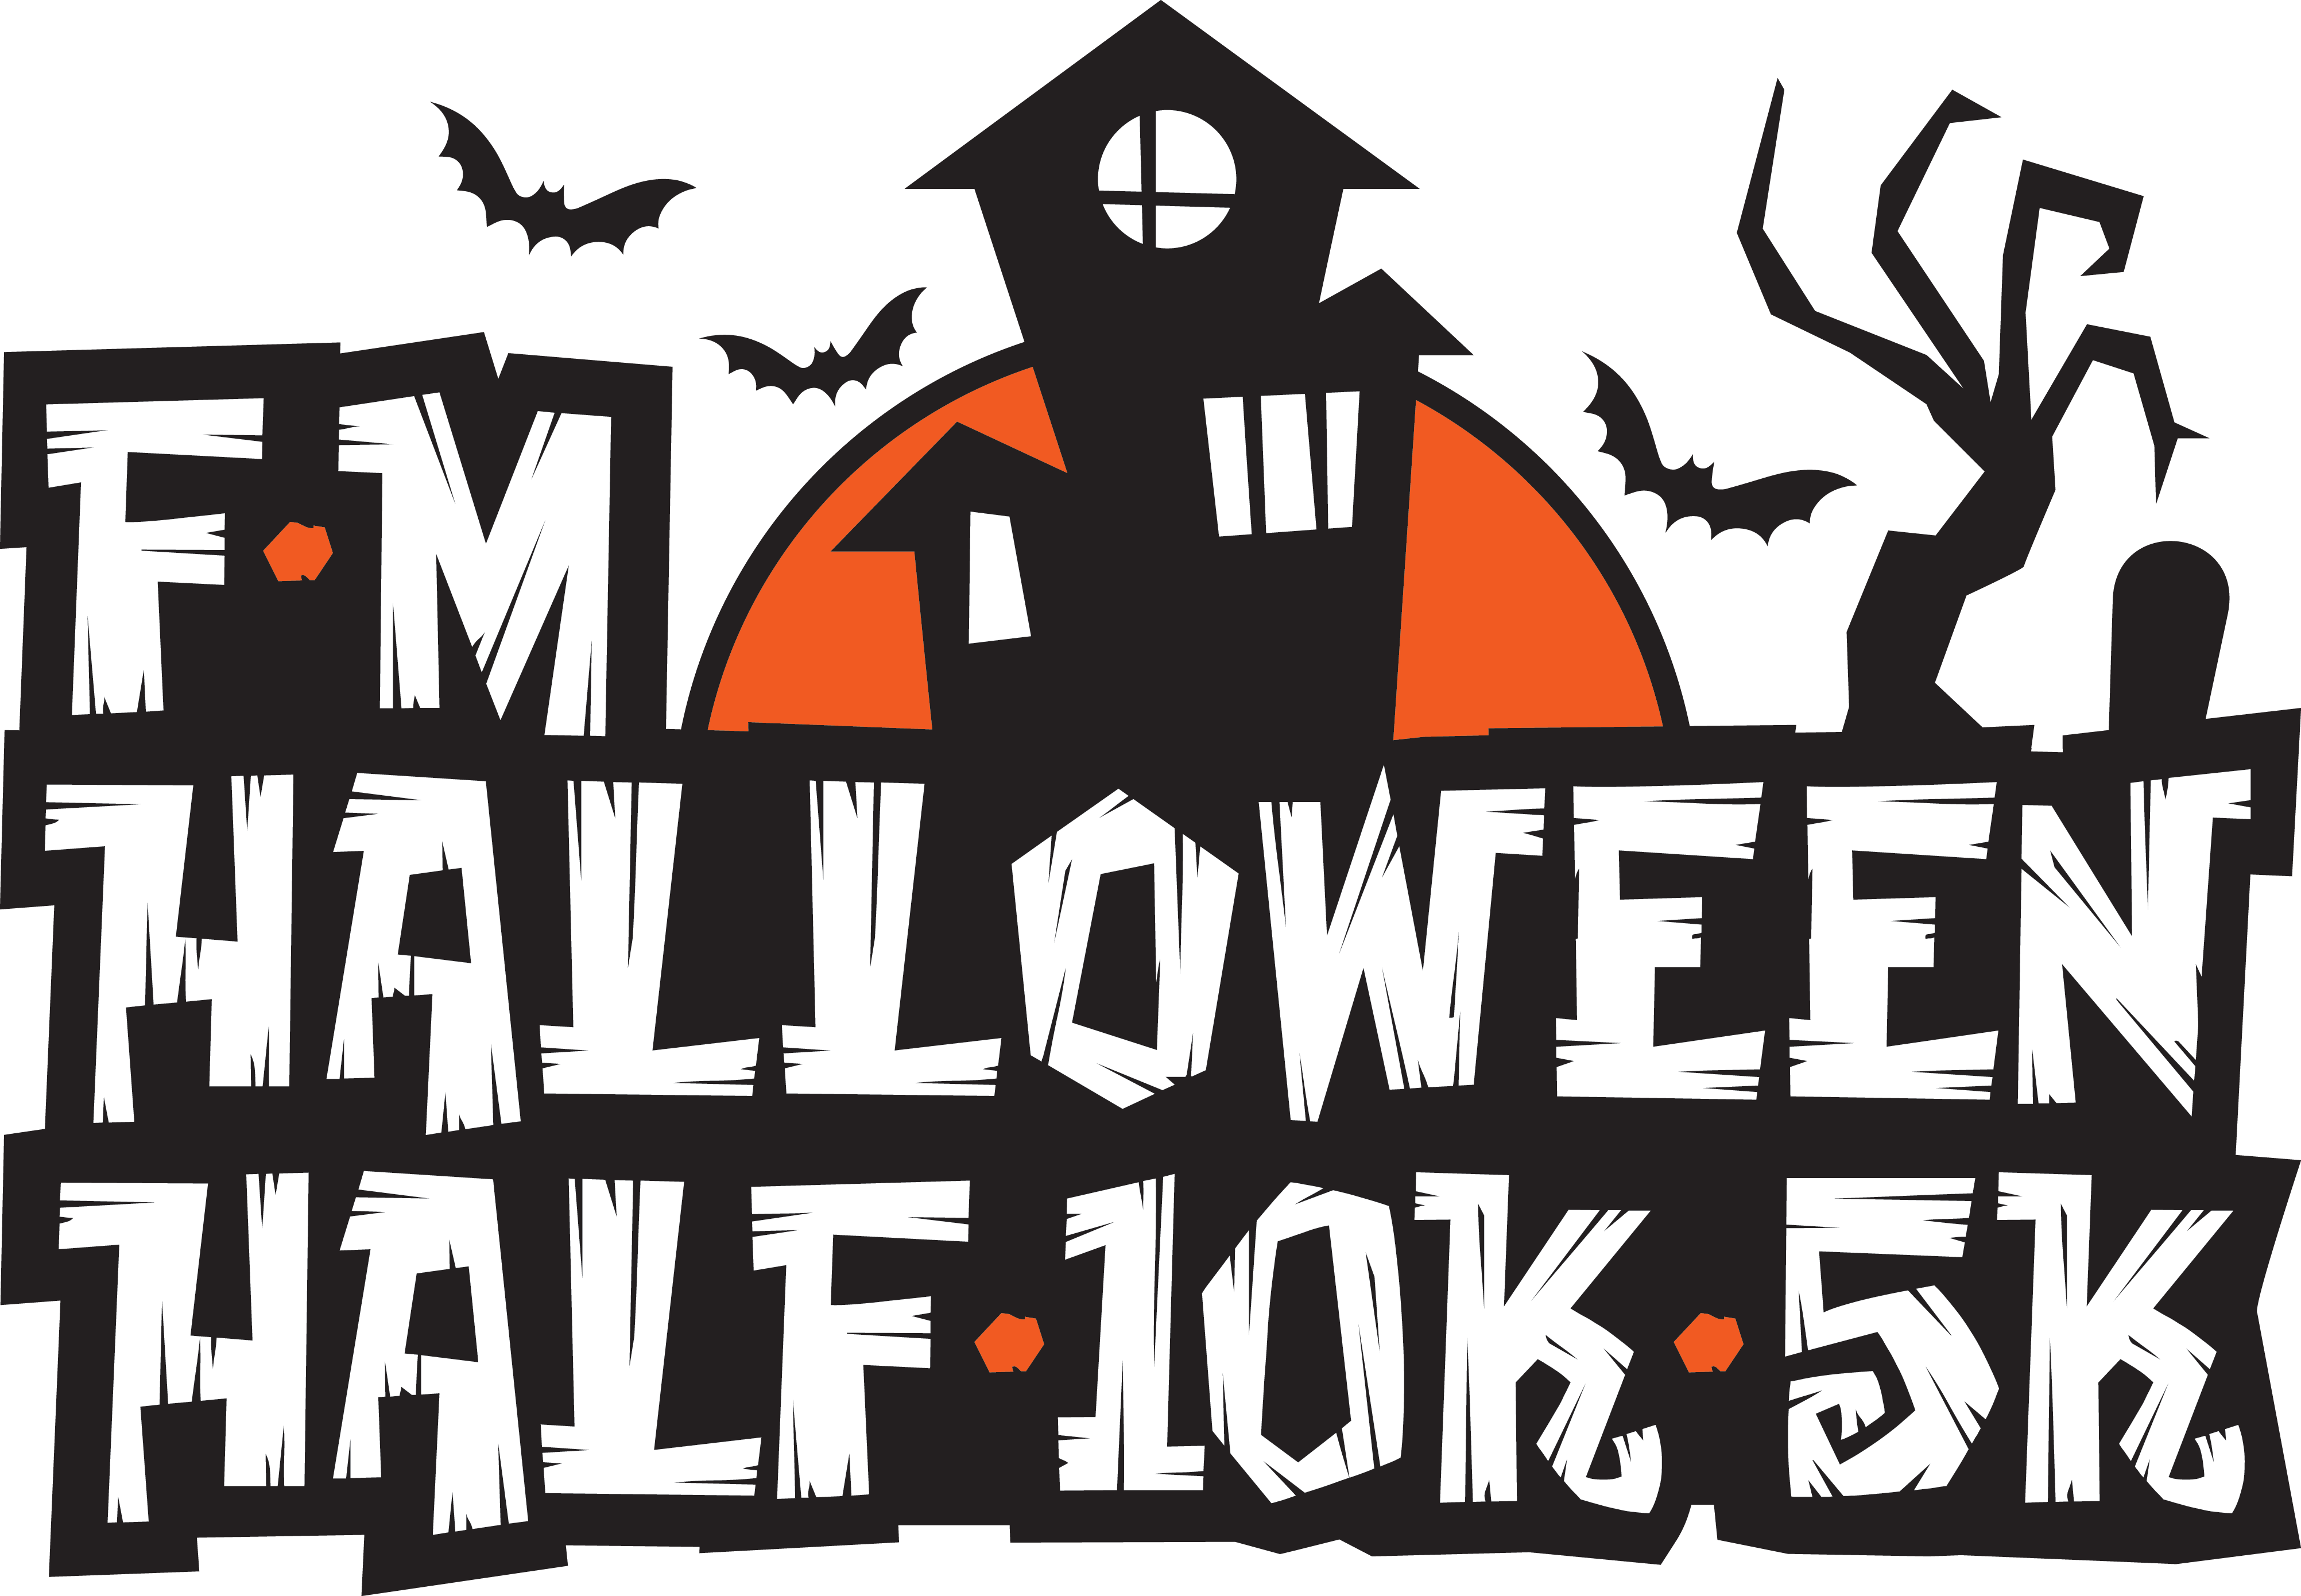 FM Halloween Half logo on RaceRaves